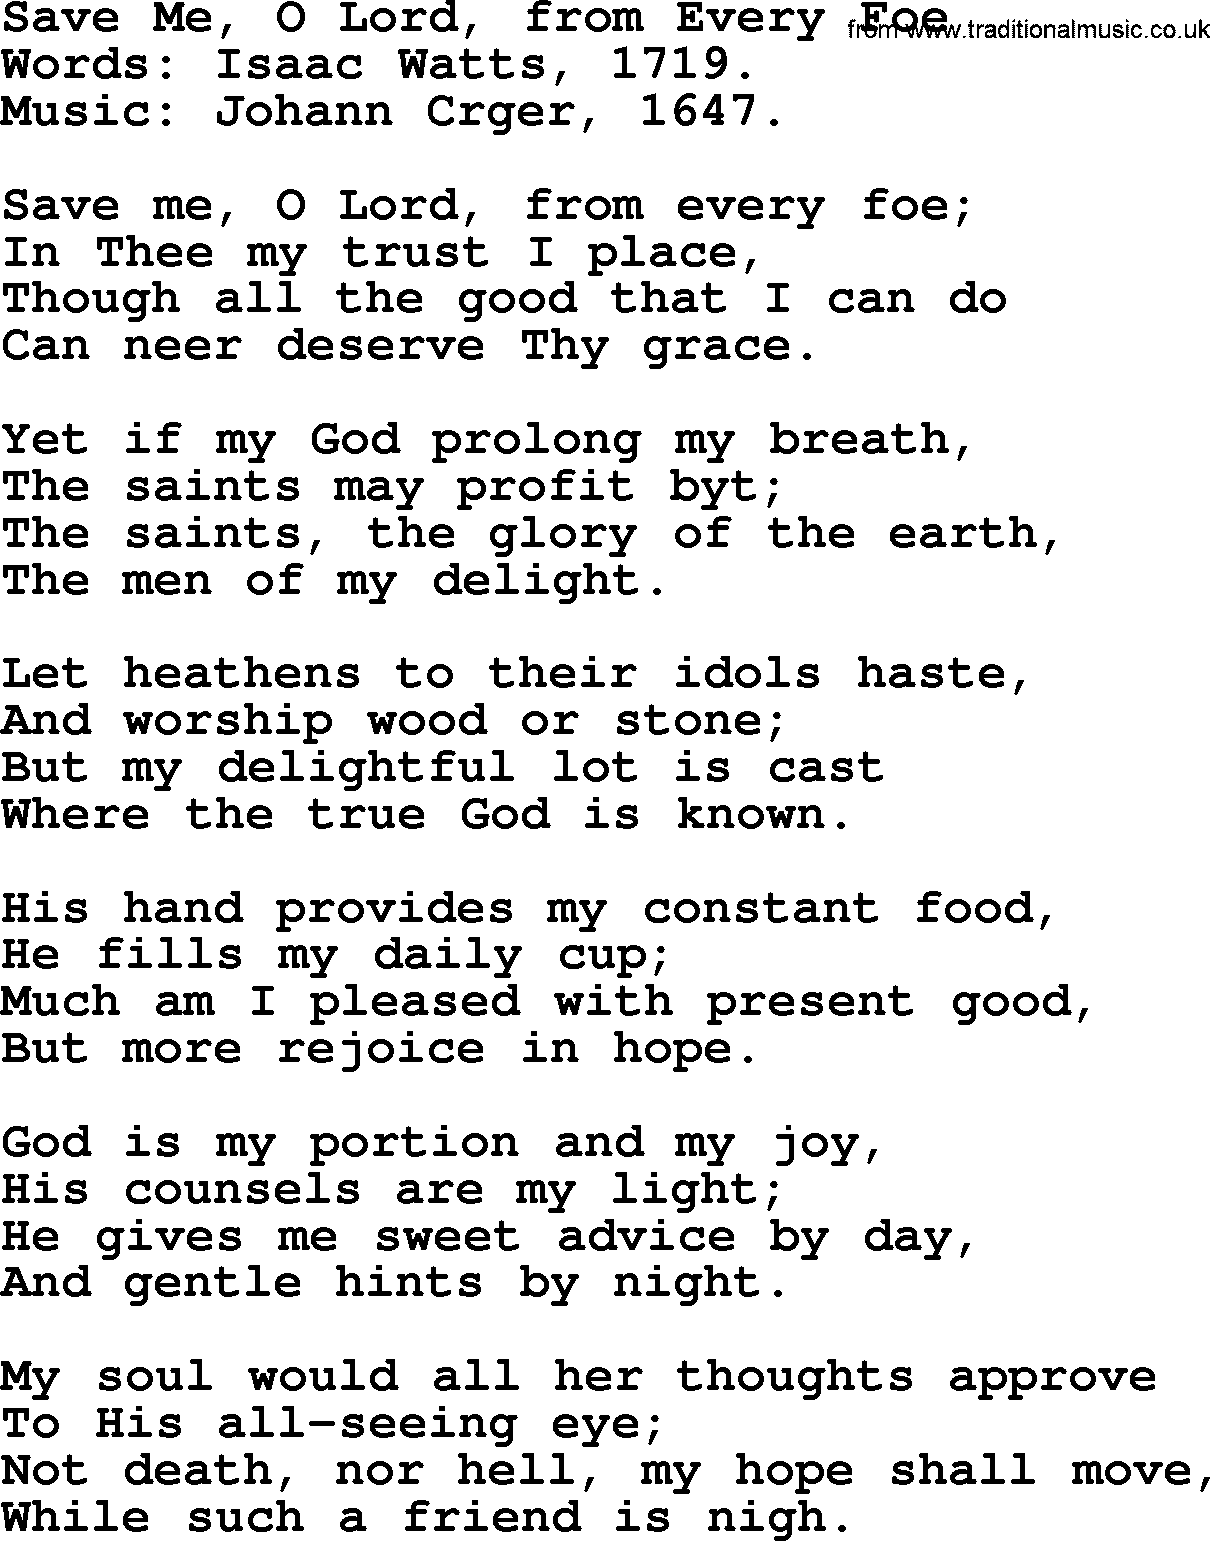 Isaac Watts Christian hymn: Save Me, O Lord, from Every Foe- lyricss